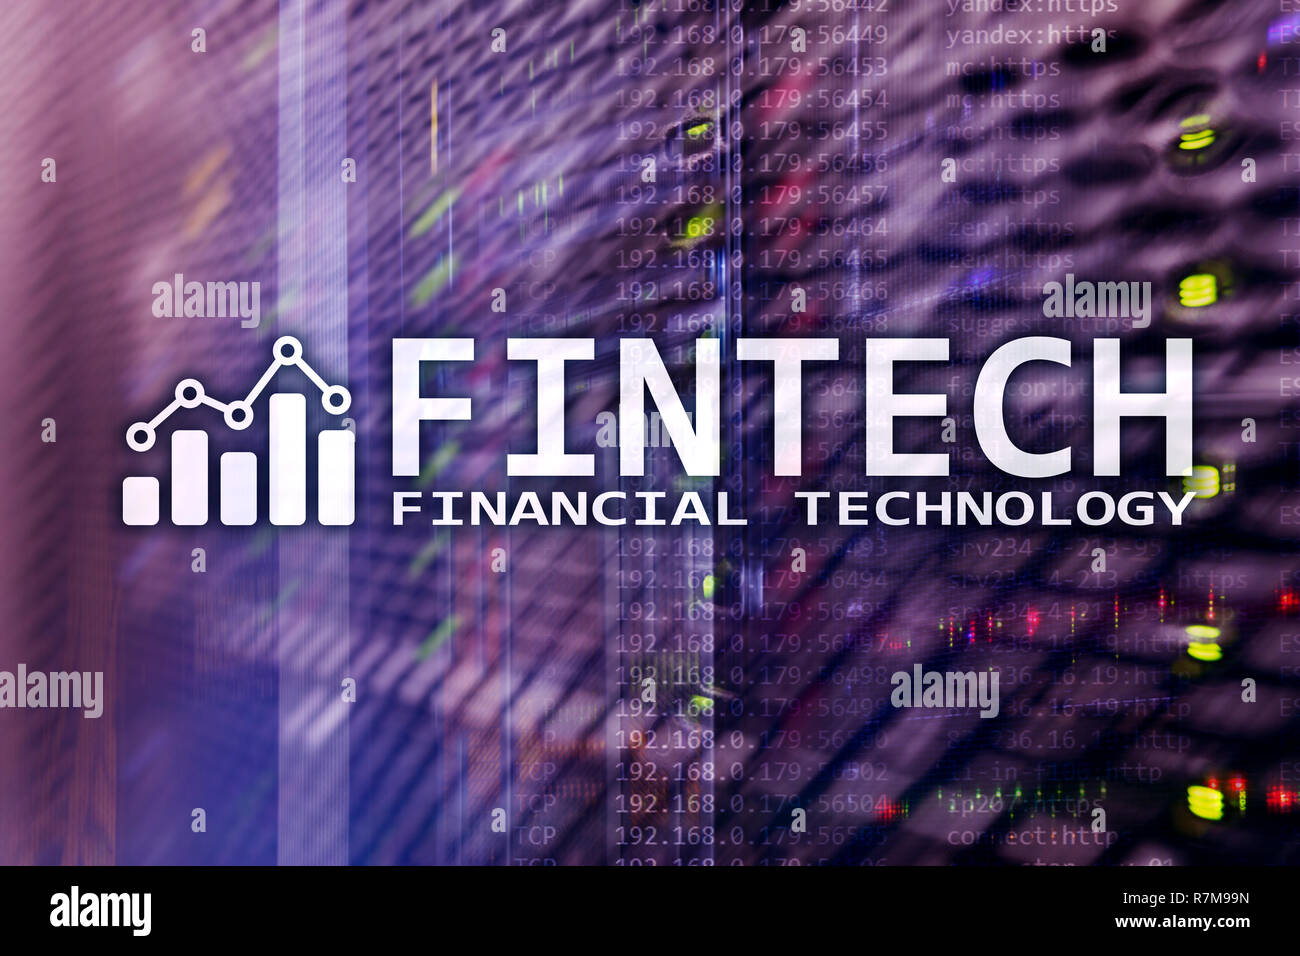 Fintech - Finanzielle Technologie. Business Solution und Software Entwicklung. Stockfoto